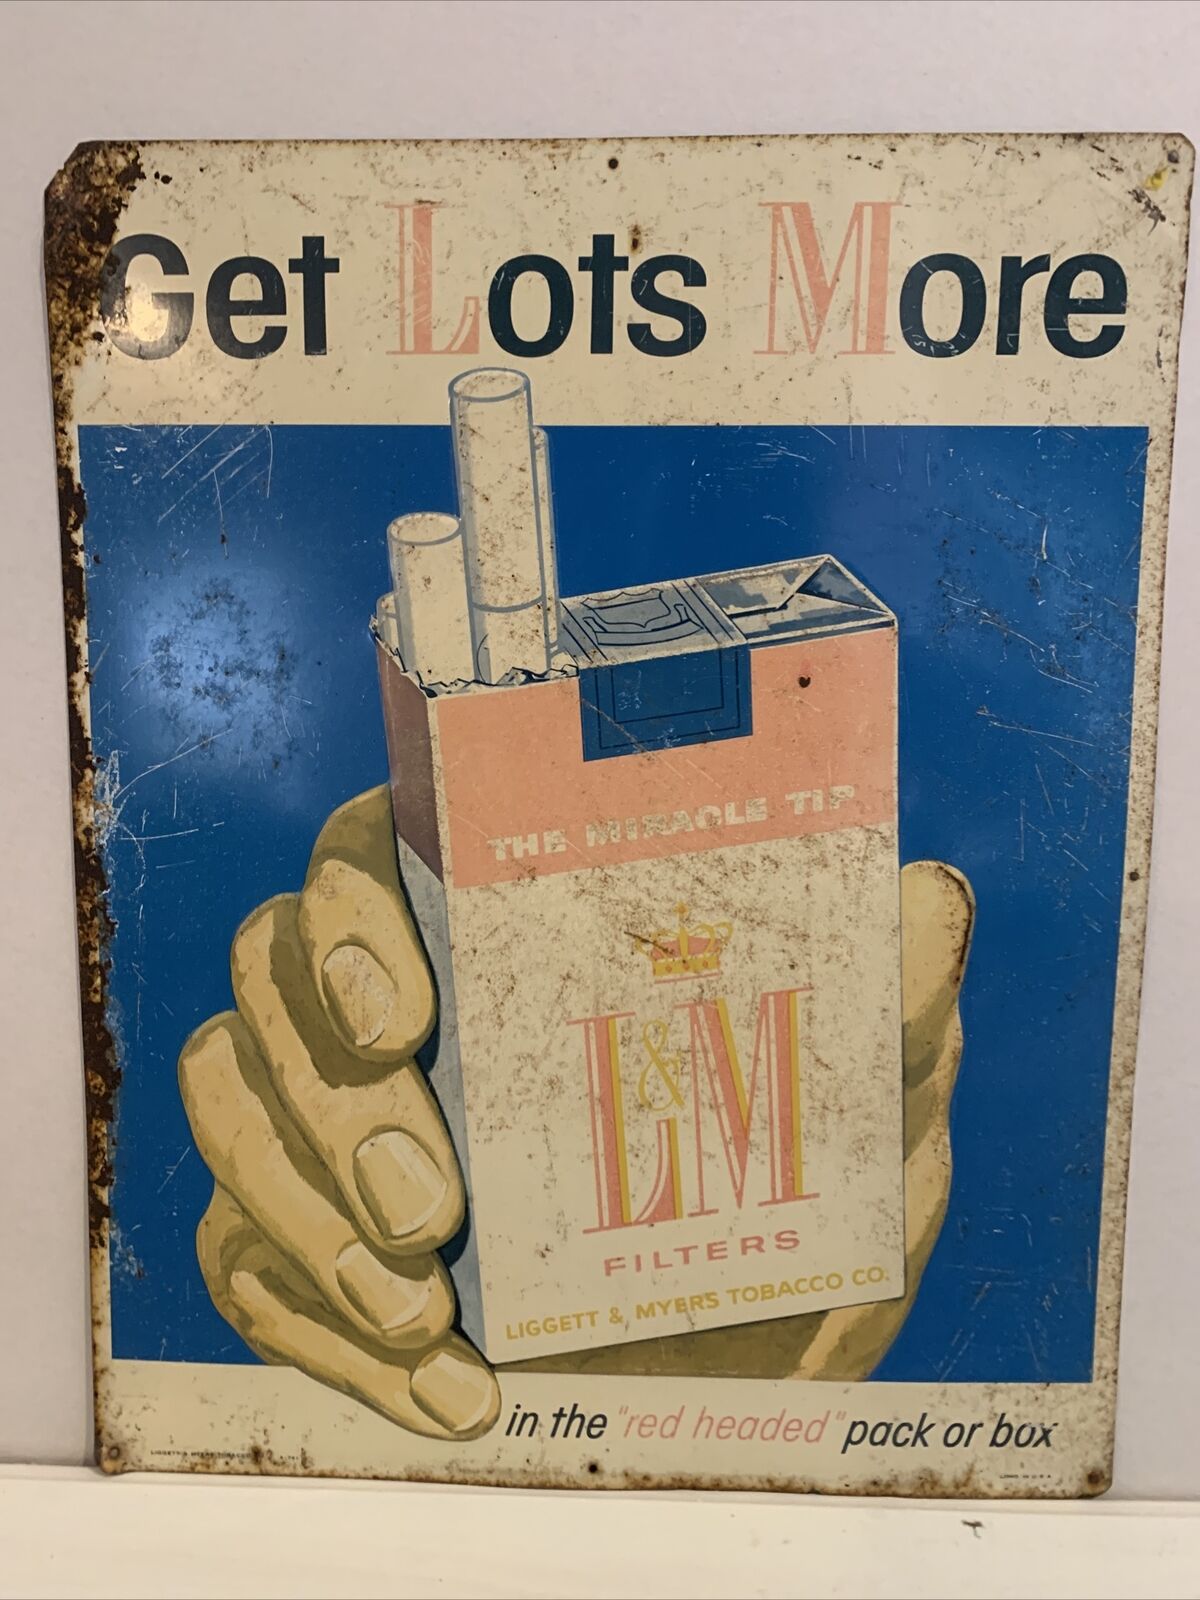 Original Tin LM Filters Cigarette Tobacco Poster Sign 1950's “Get Lots More”